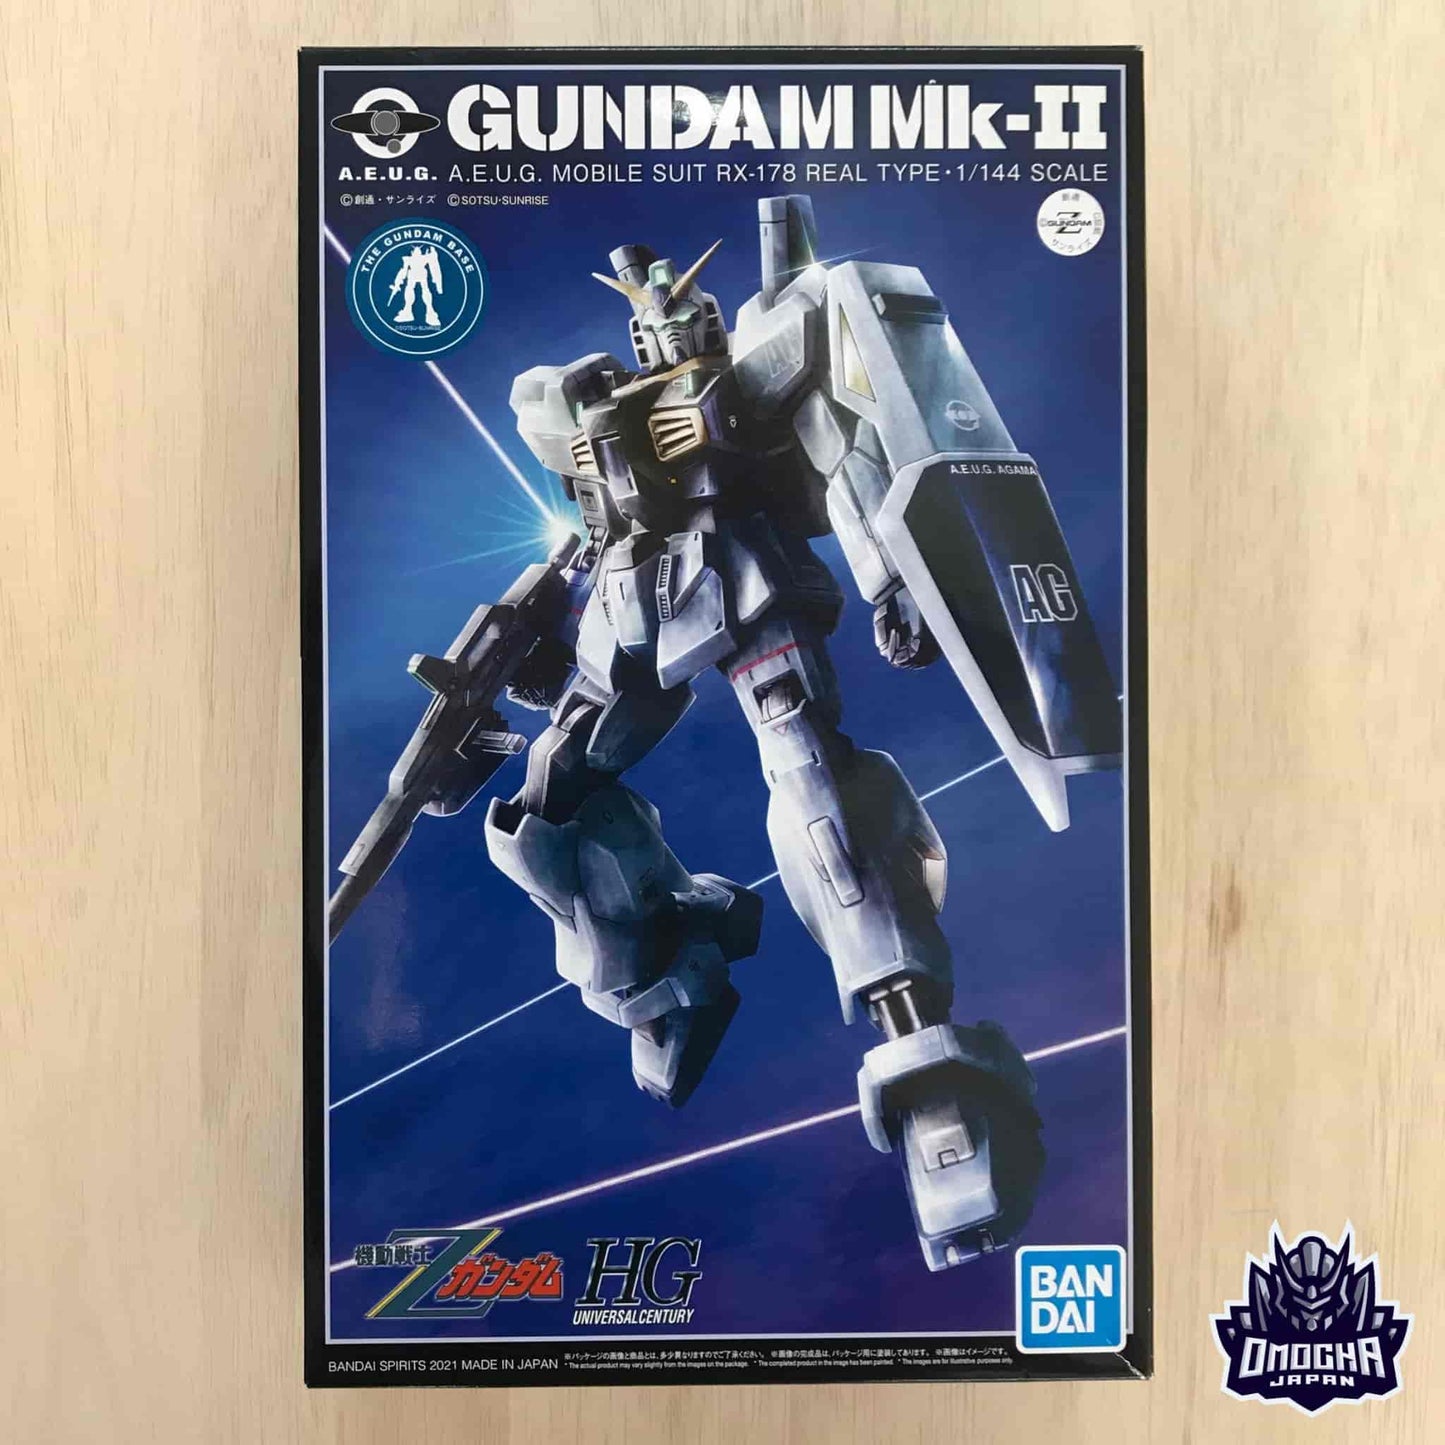 Gundam Base Limited 1/144 HGUC RX-178 Gundam Mk-II 21st CENTURY REAL TYPE Ver.